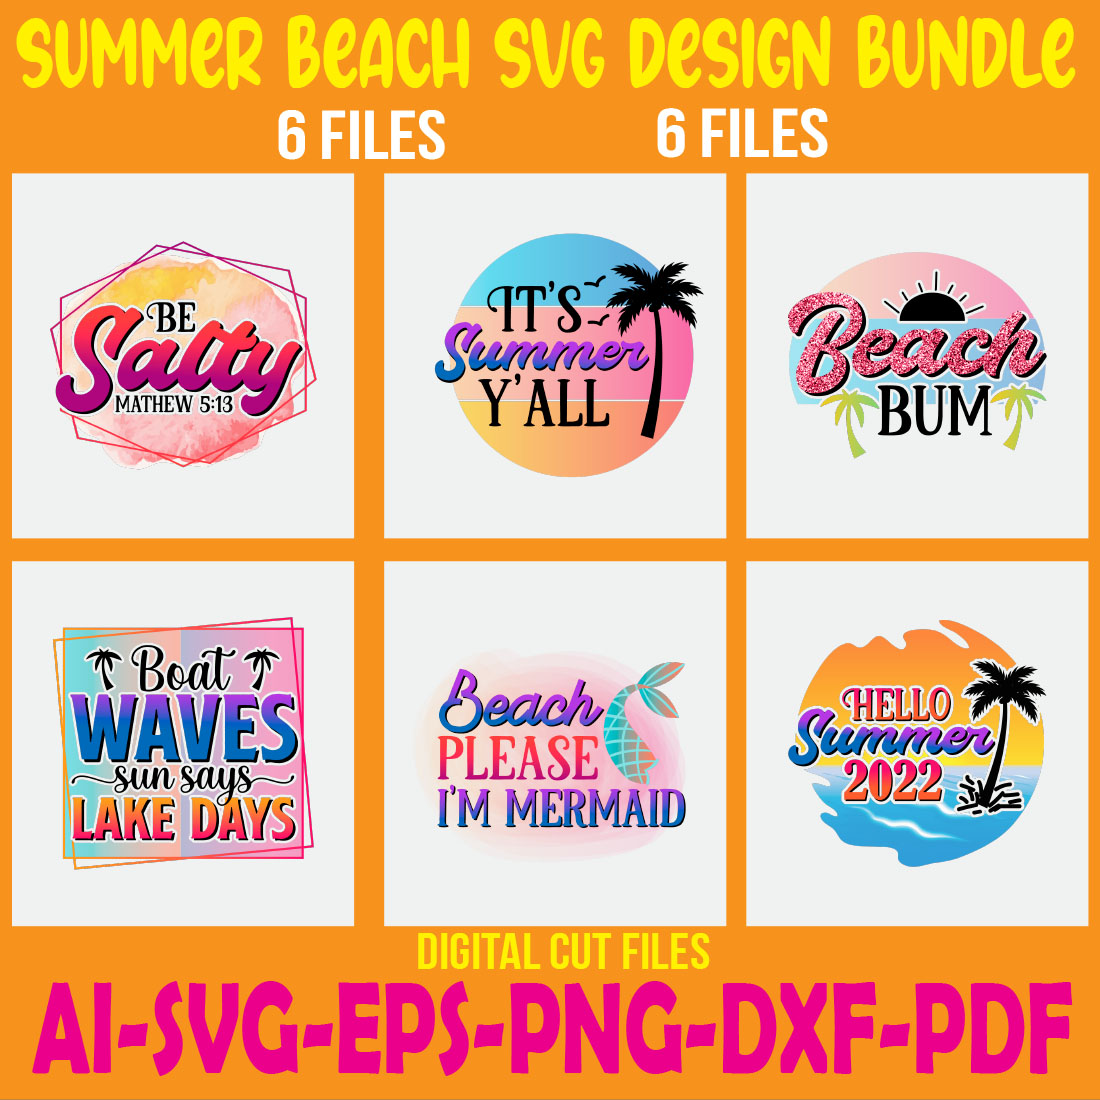 Summer Beach SVG Design Bundle cover image.